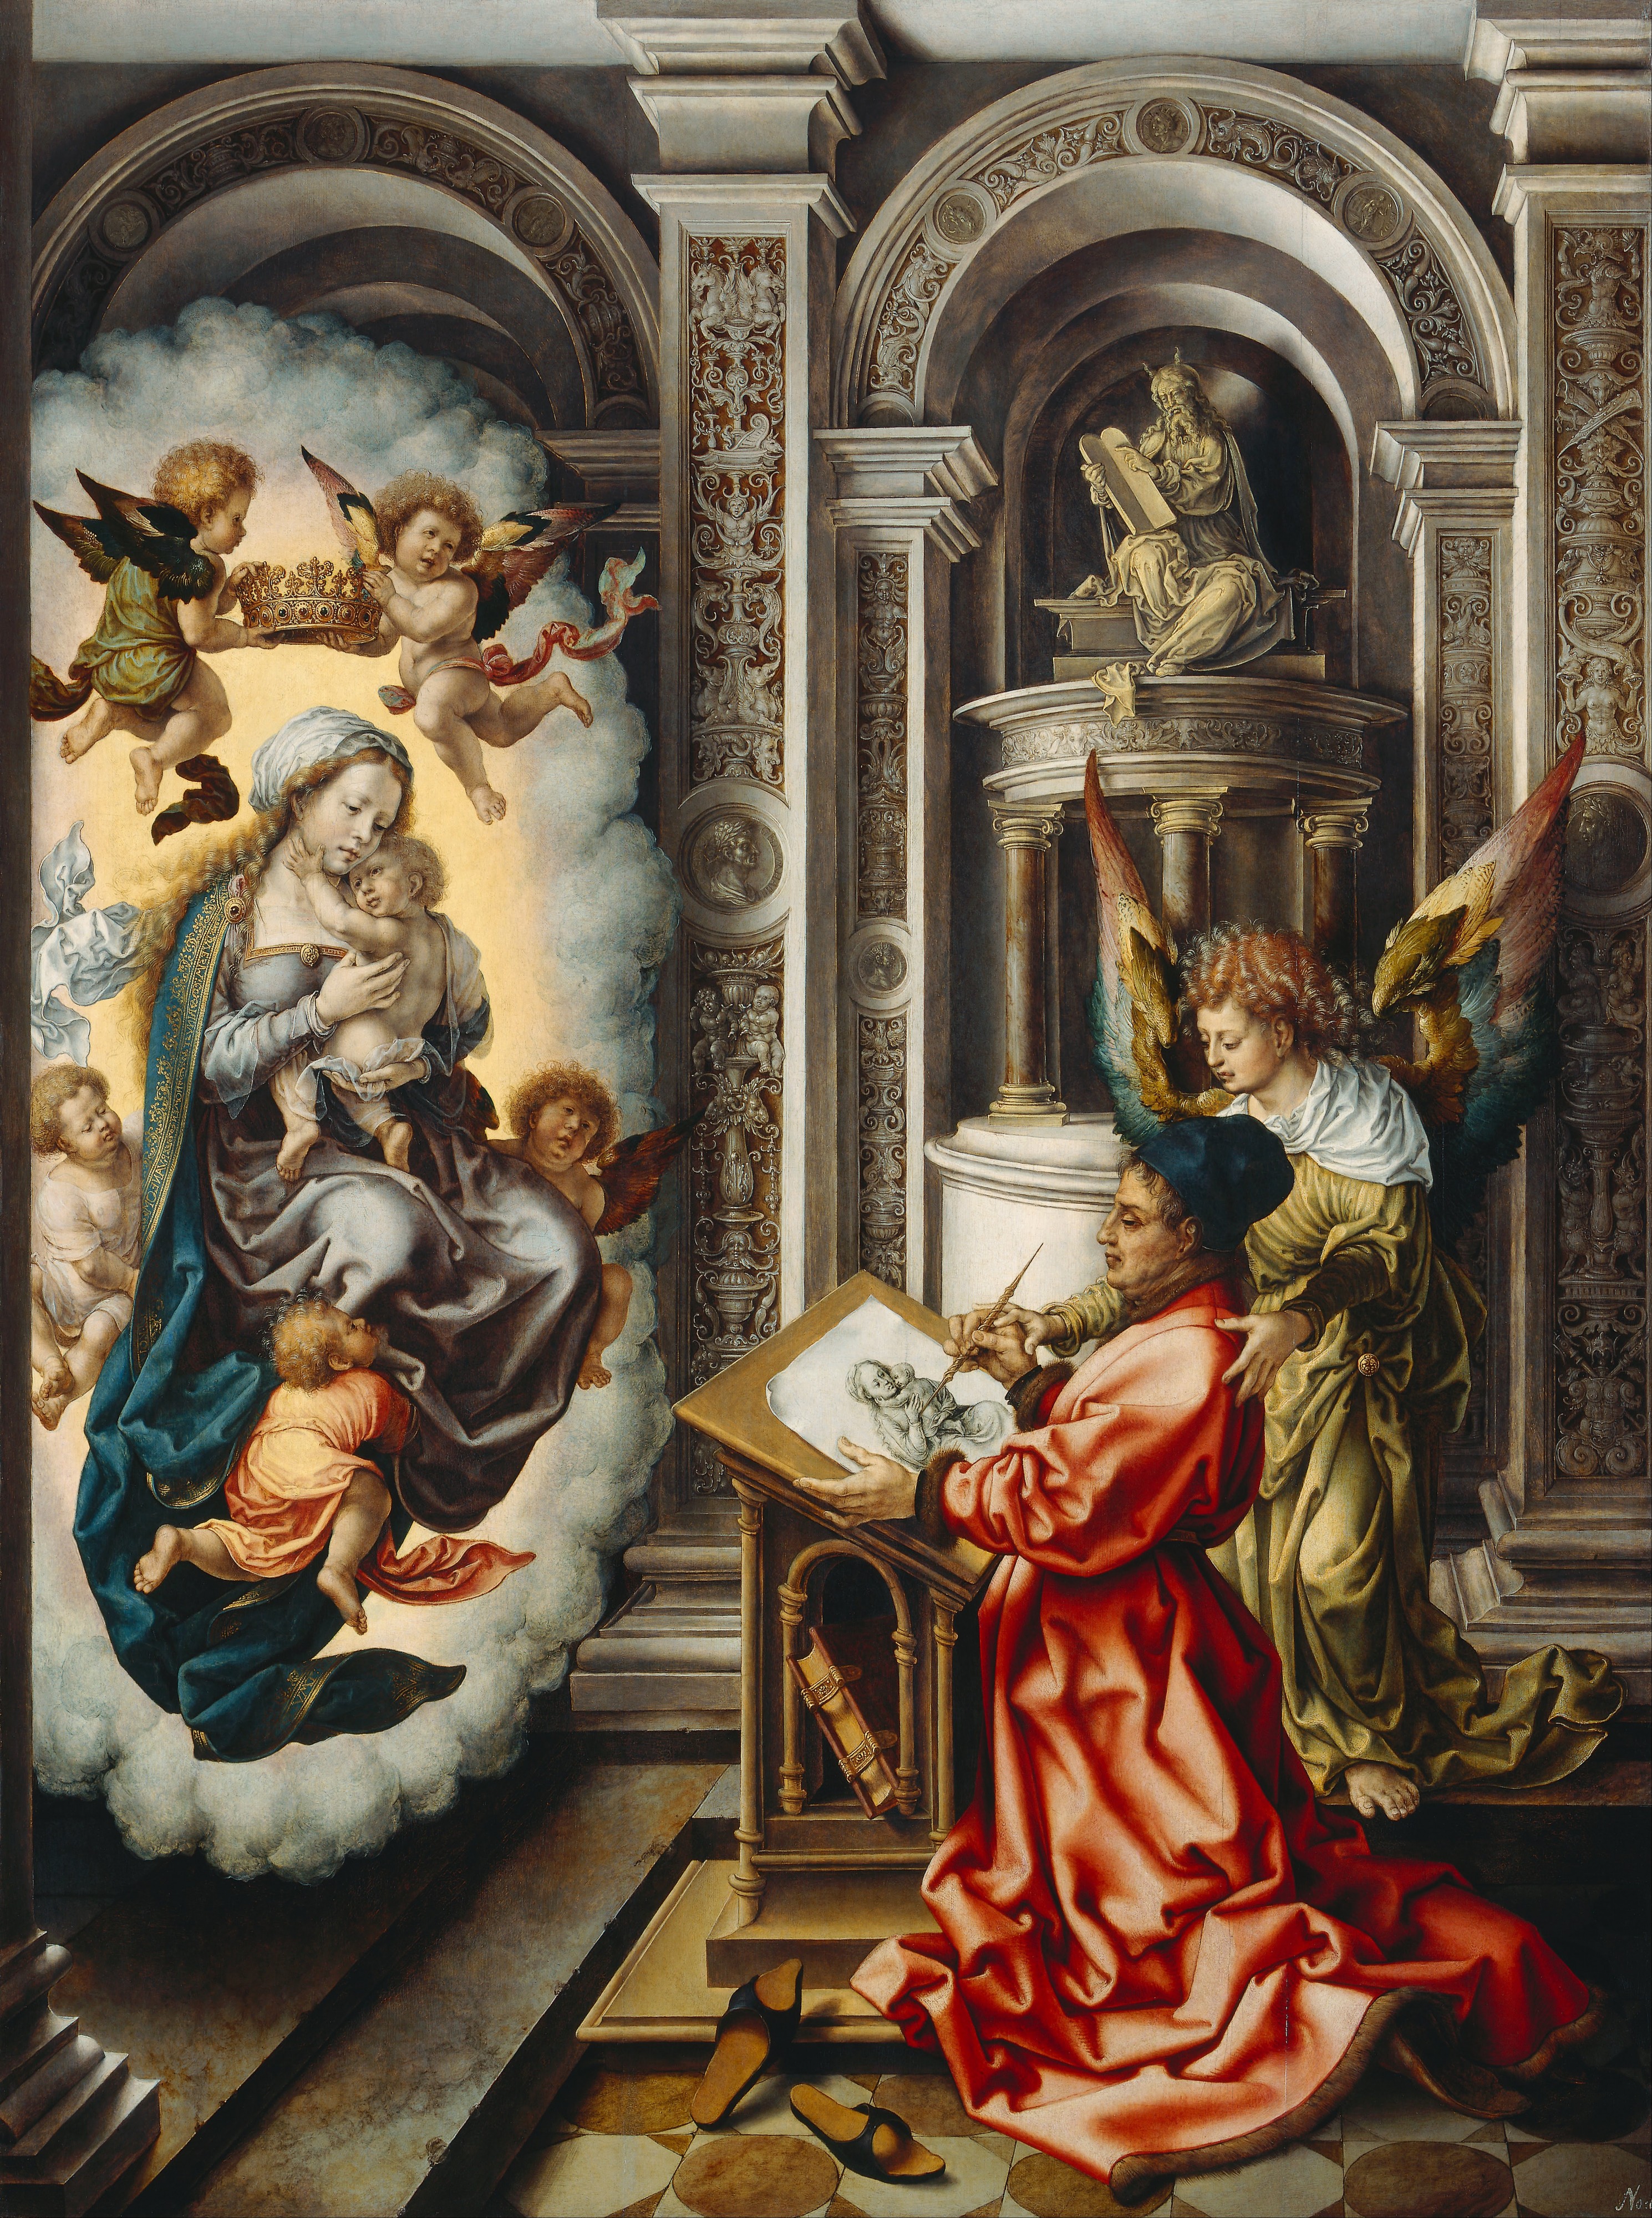 Jan Gossaert - St. Luke Painting the Madonna - Google Art Project